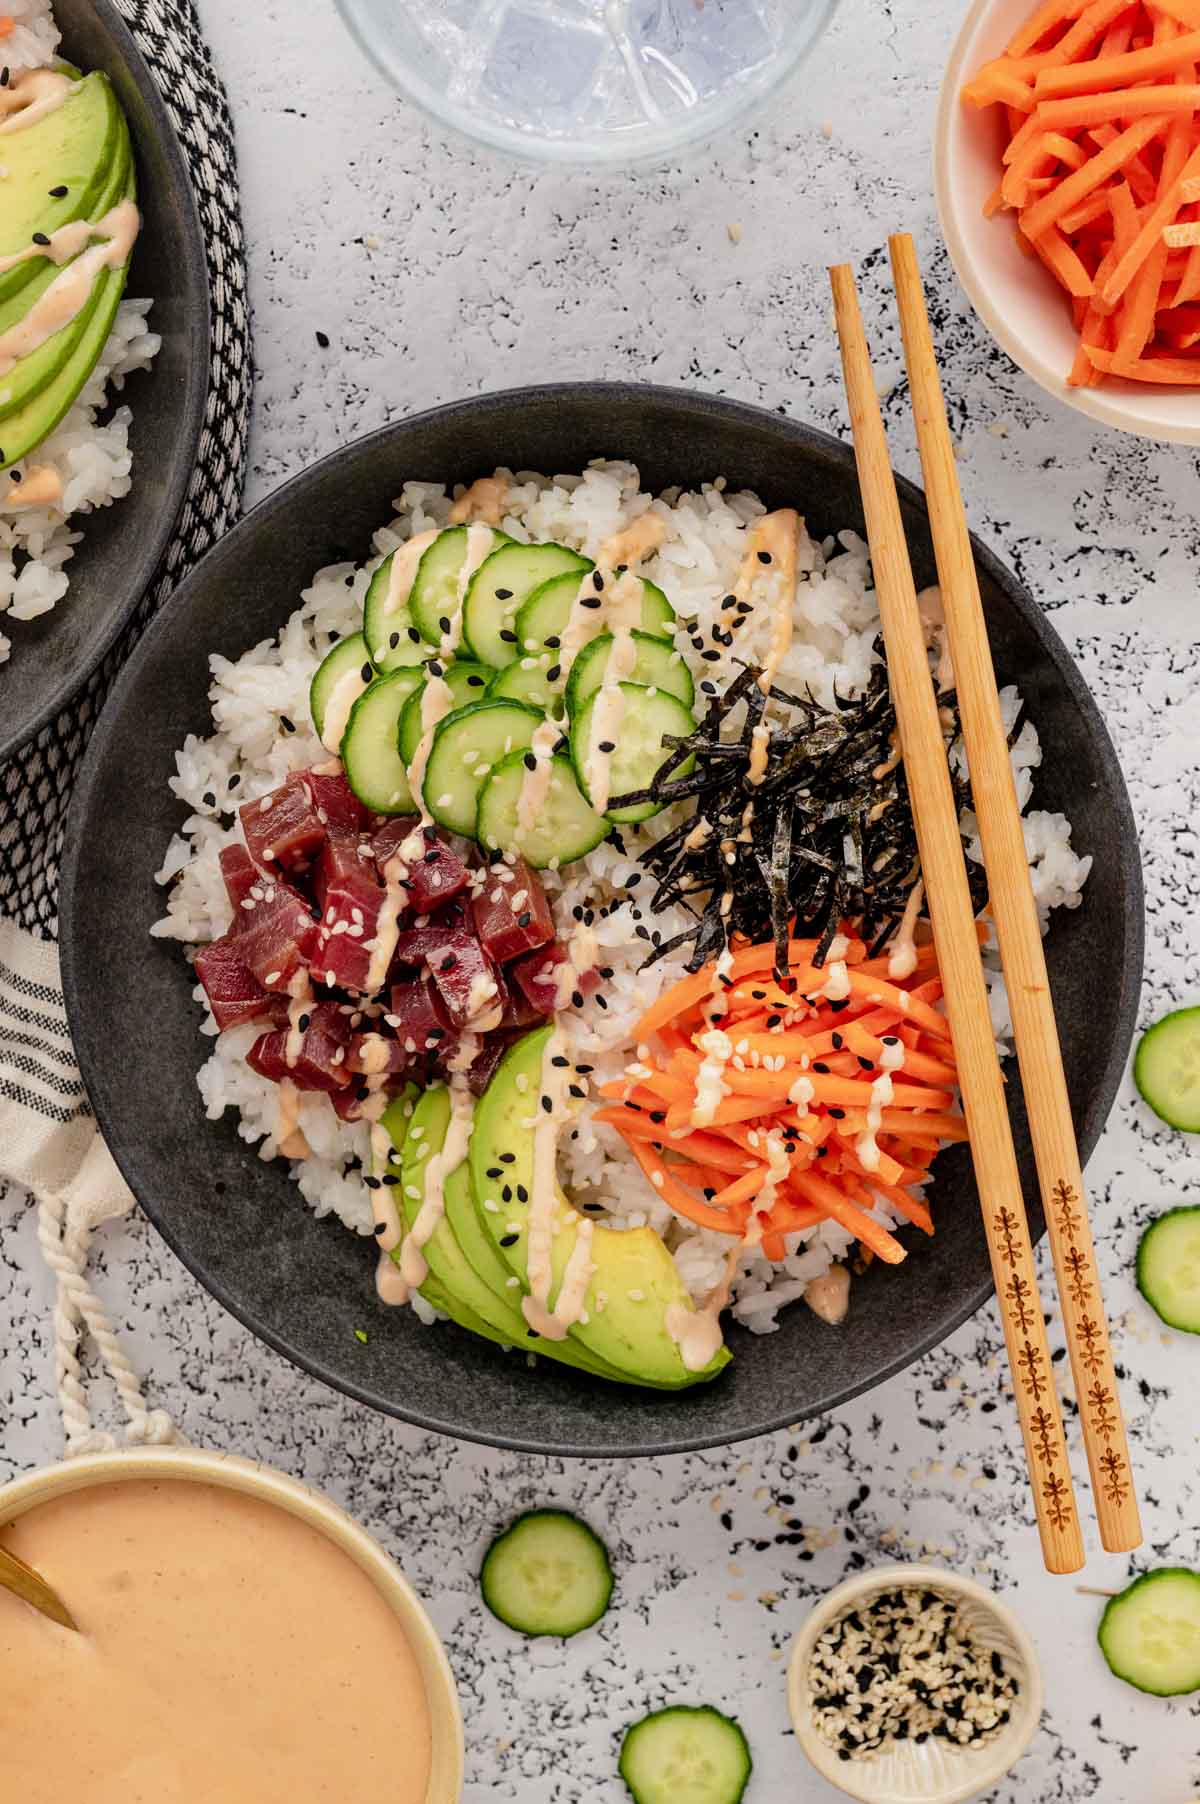 White rice, cucumbers, seaweed, carrots and sashimi tuna in a bowl.